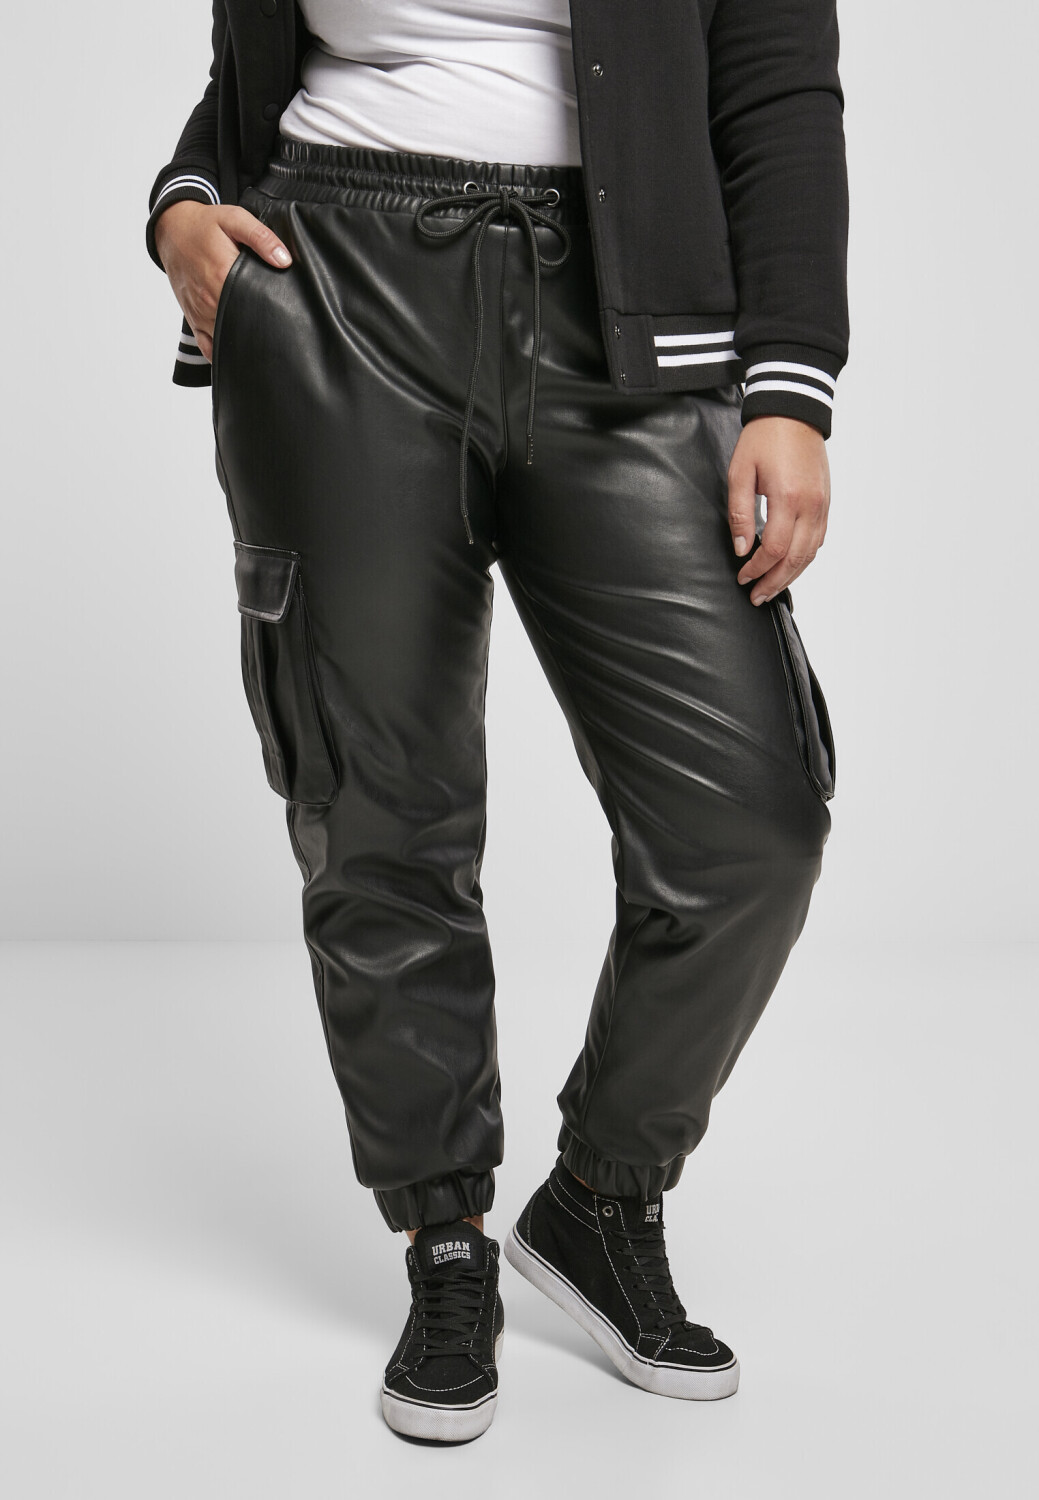 Preisvergleich Faux (TB3983-00007-0039) 32,99 Leather Cargo schwarz | Pants Black bei Classics Ladies € ab Urban